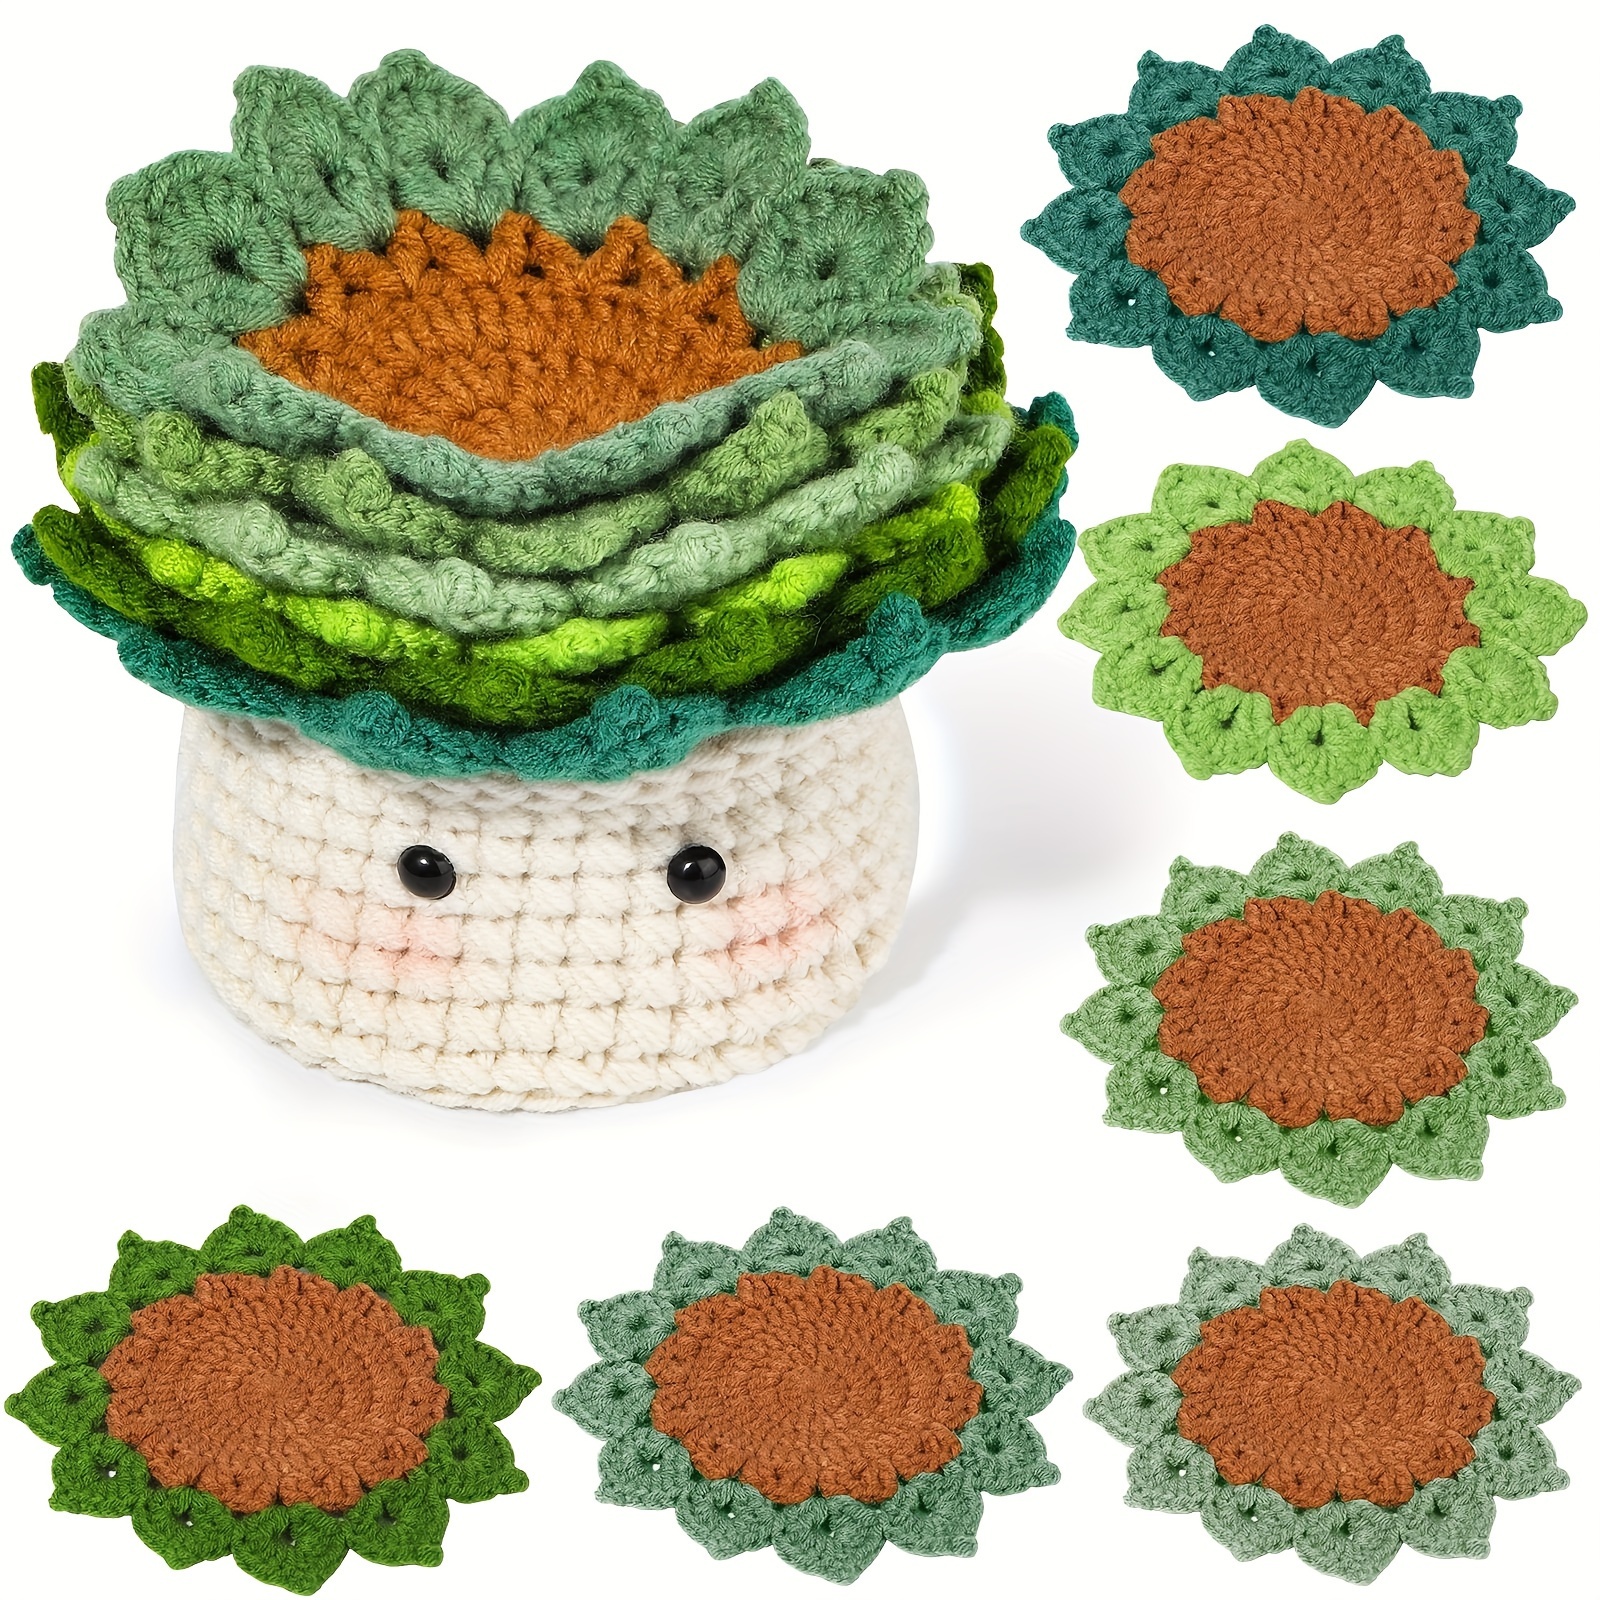  Crochetta Crochet Kit for Beginners, Crochet Kit w Step-by-Step  Video Tutorials, Crochet Starter Kit Learn to Crochet Kits for Adults Kids  Beginners, 2 Sunflower Phone Holders (40%+ Yarn Content)